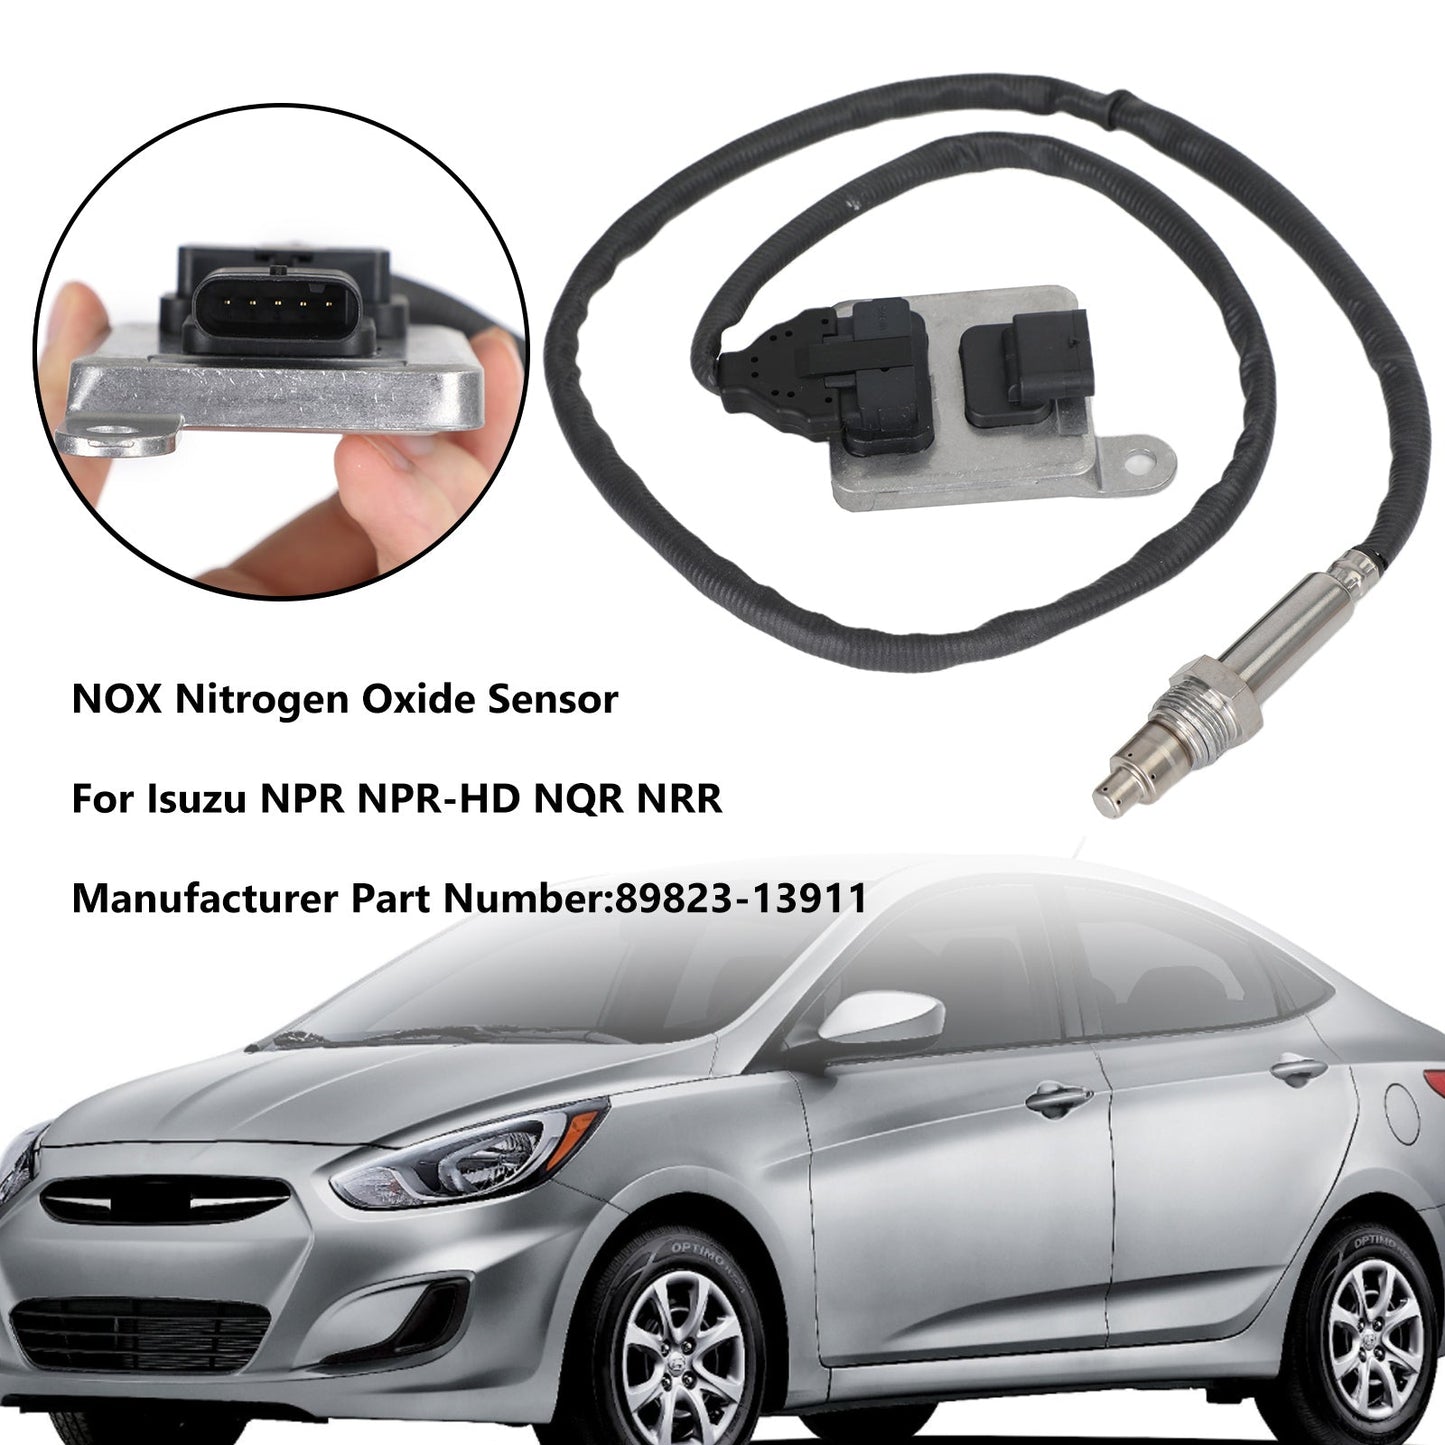 NOX Nitrogen Oxide Sensor 89823-13911 For Isuzu NPR NPR-HD NQR NRR 2010-2013